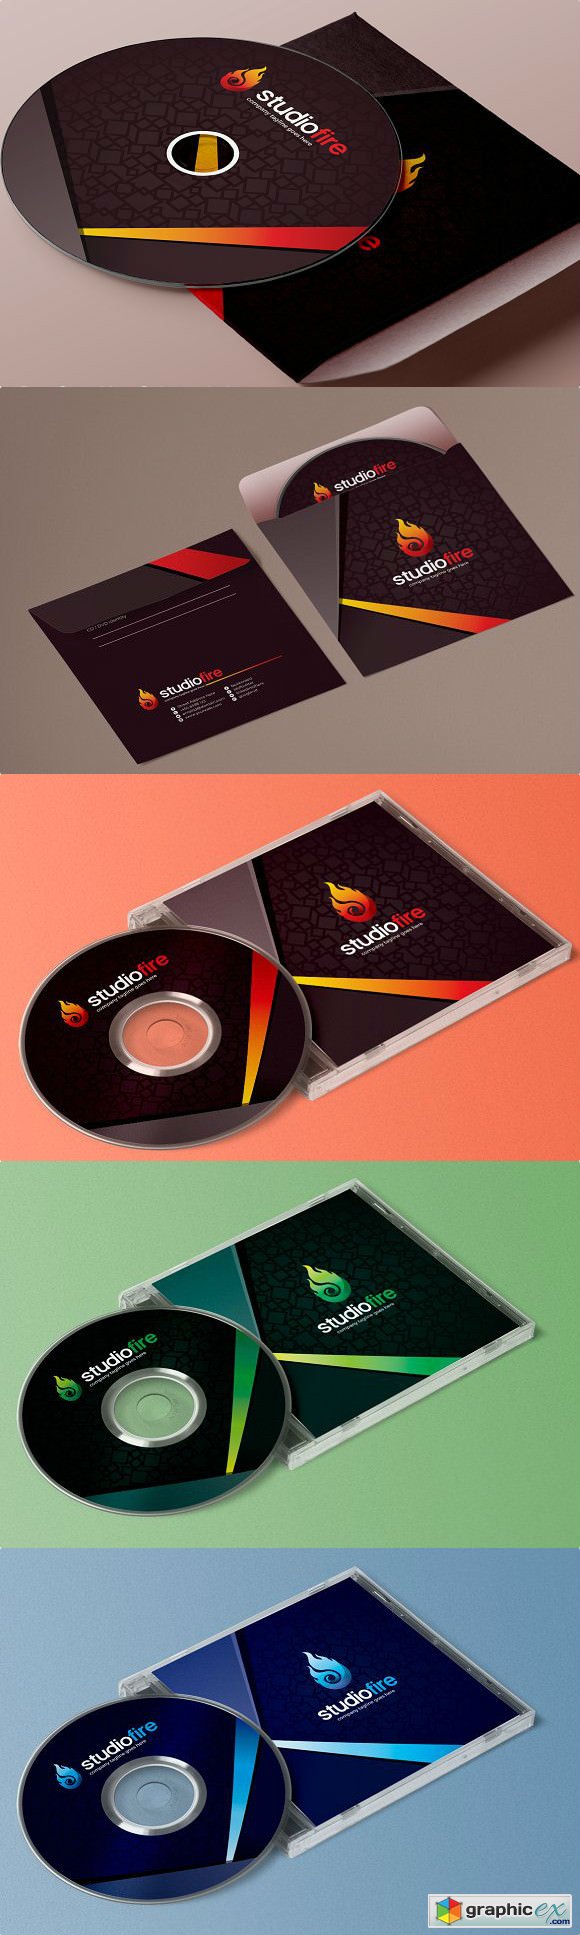 CD DVD Album Cover Design Template